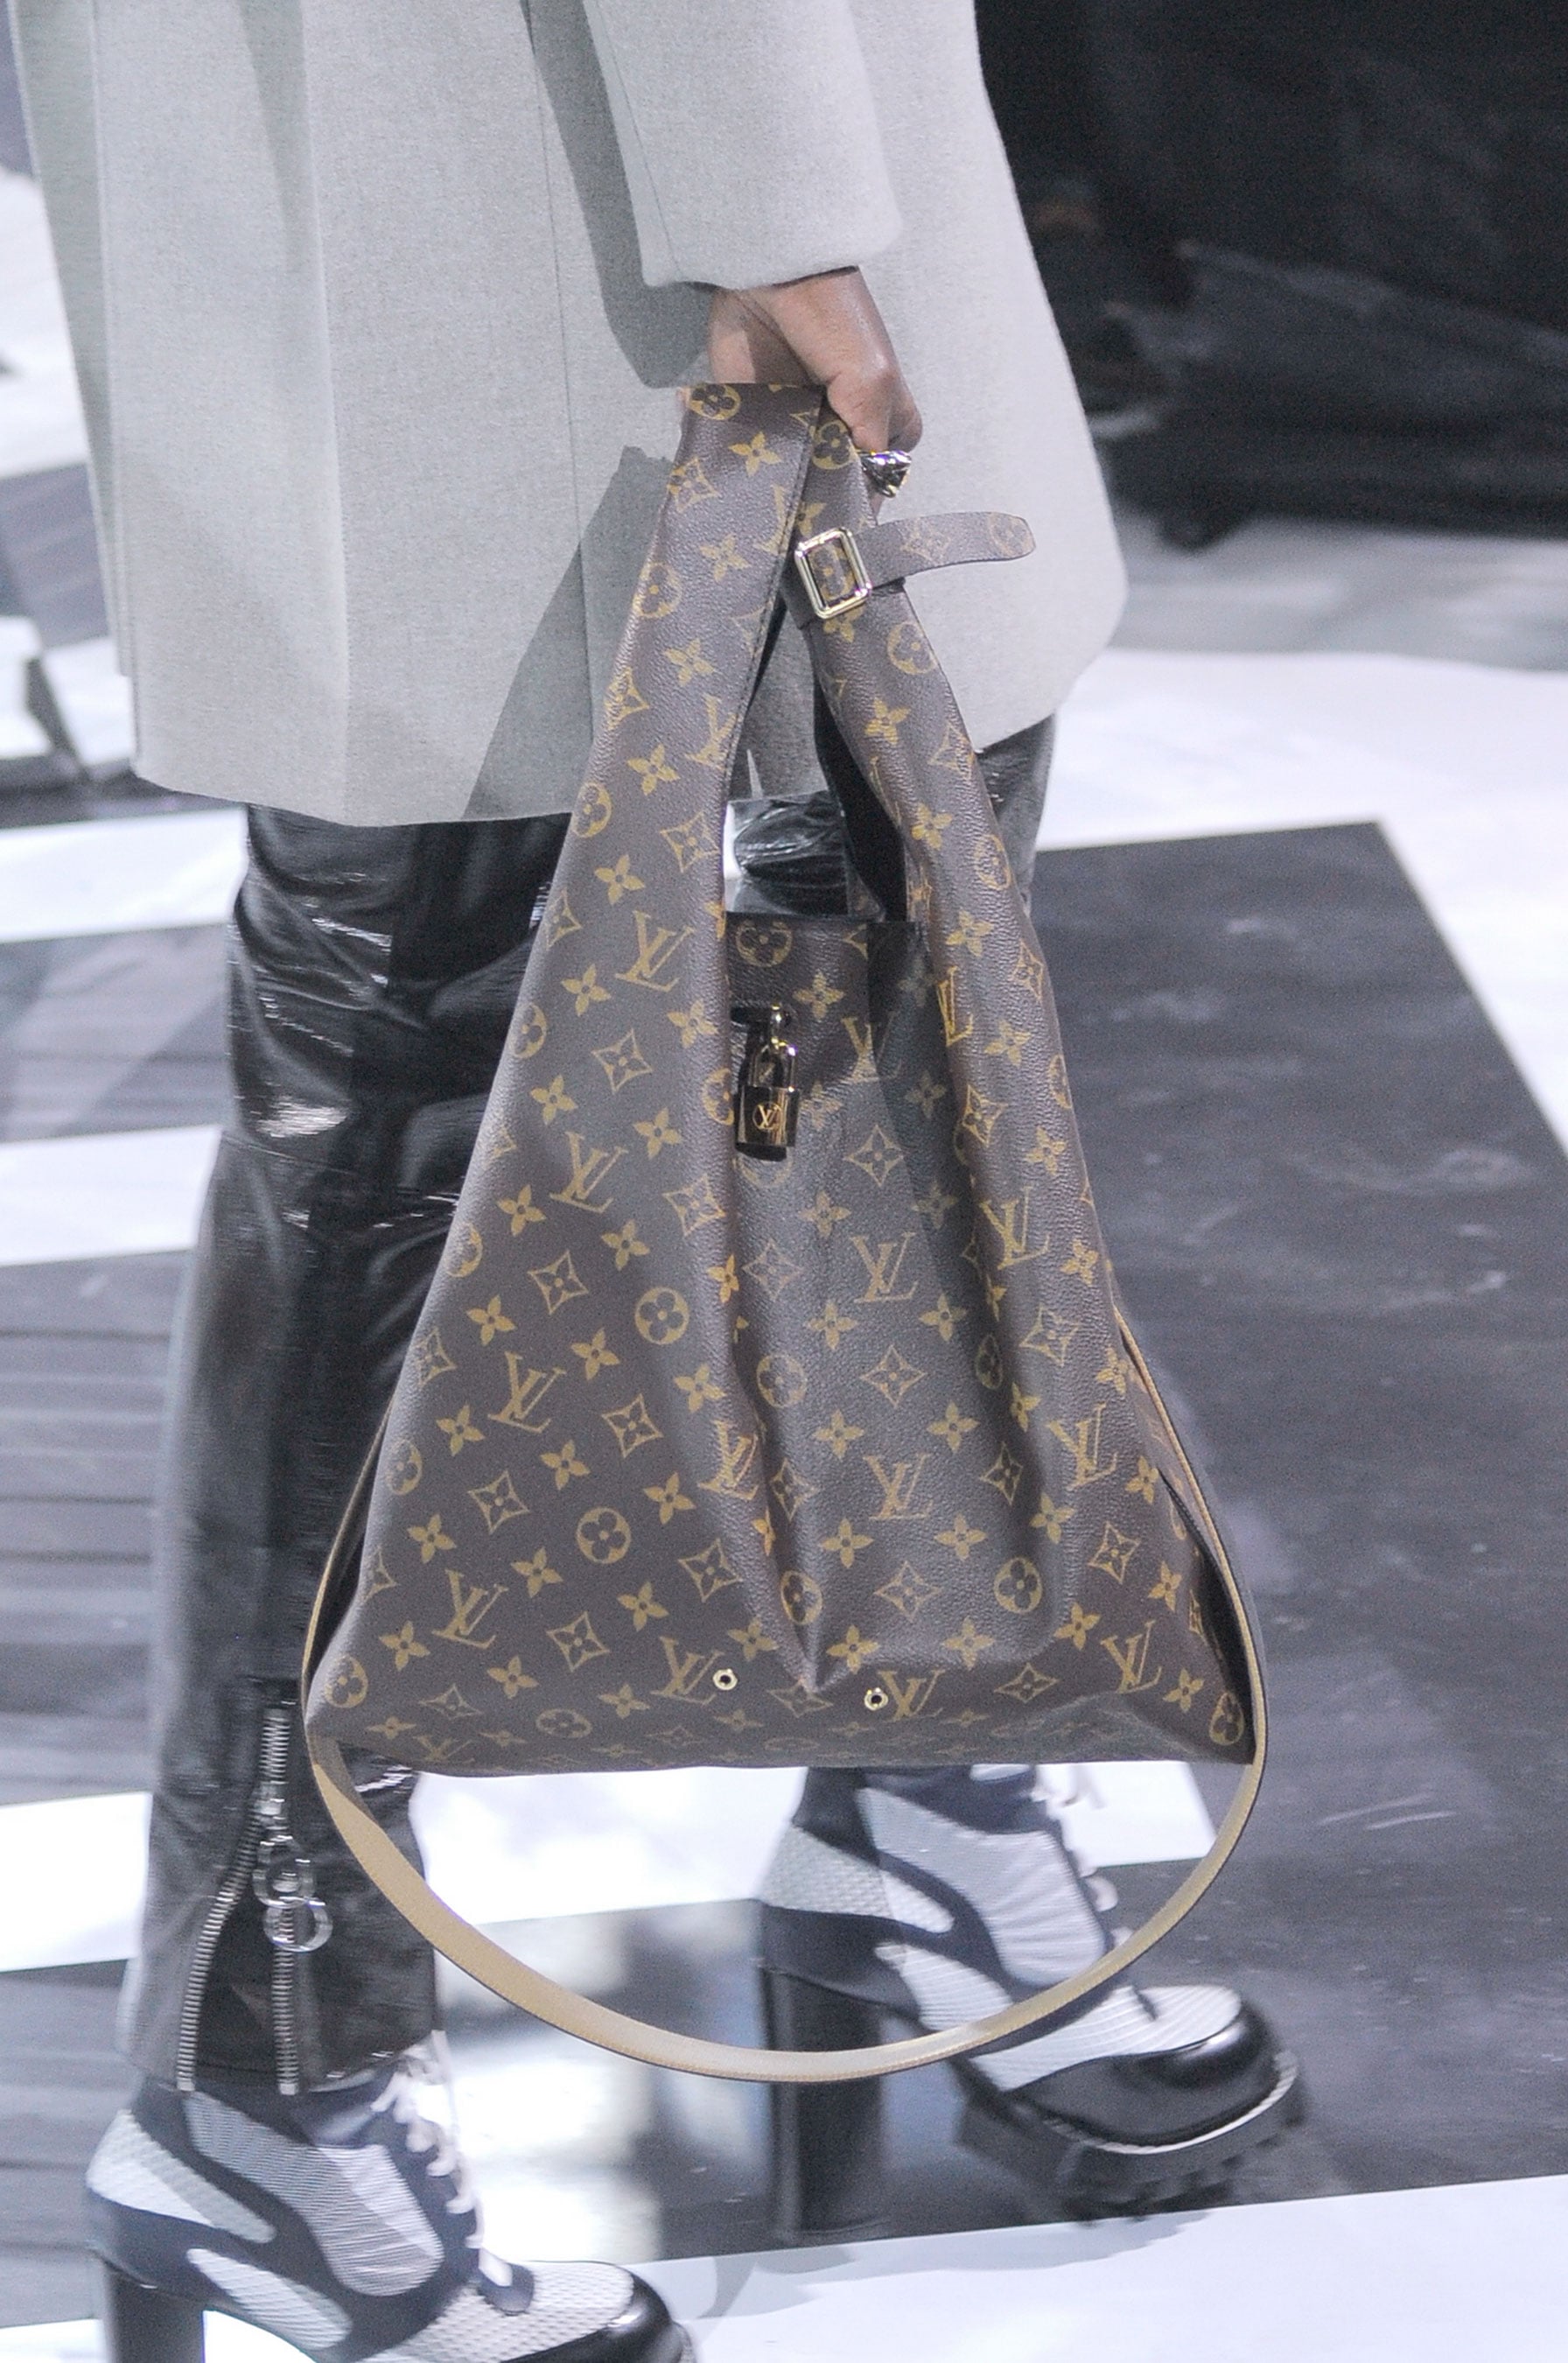 Louis Vuitton Handbag Atlantis Monogram Mm Brown